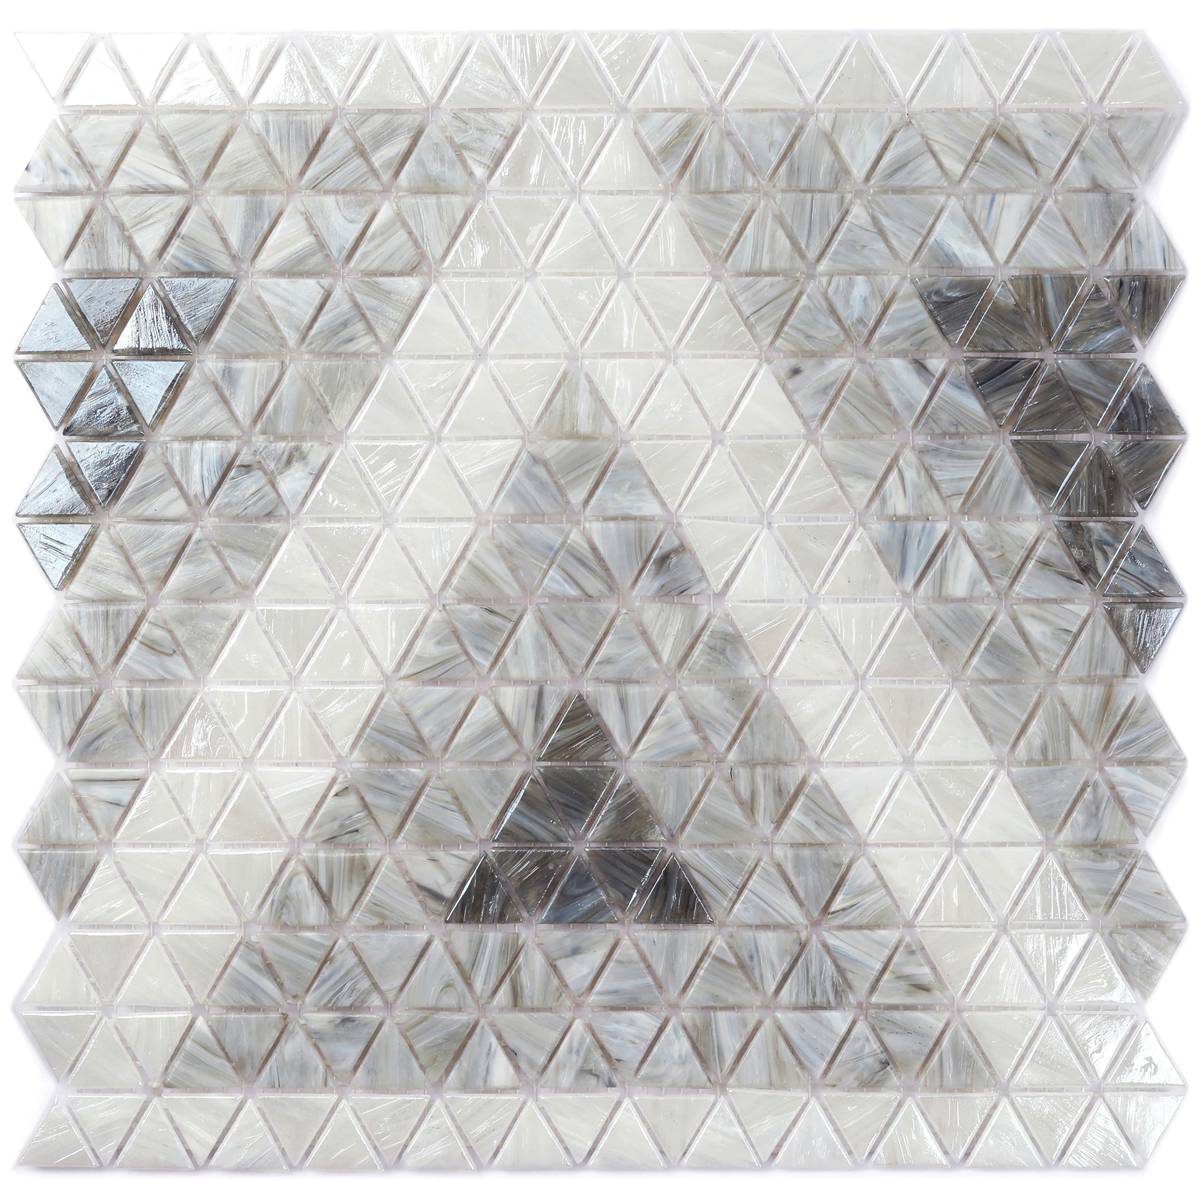 Patterned kitchen floor glass tiles